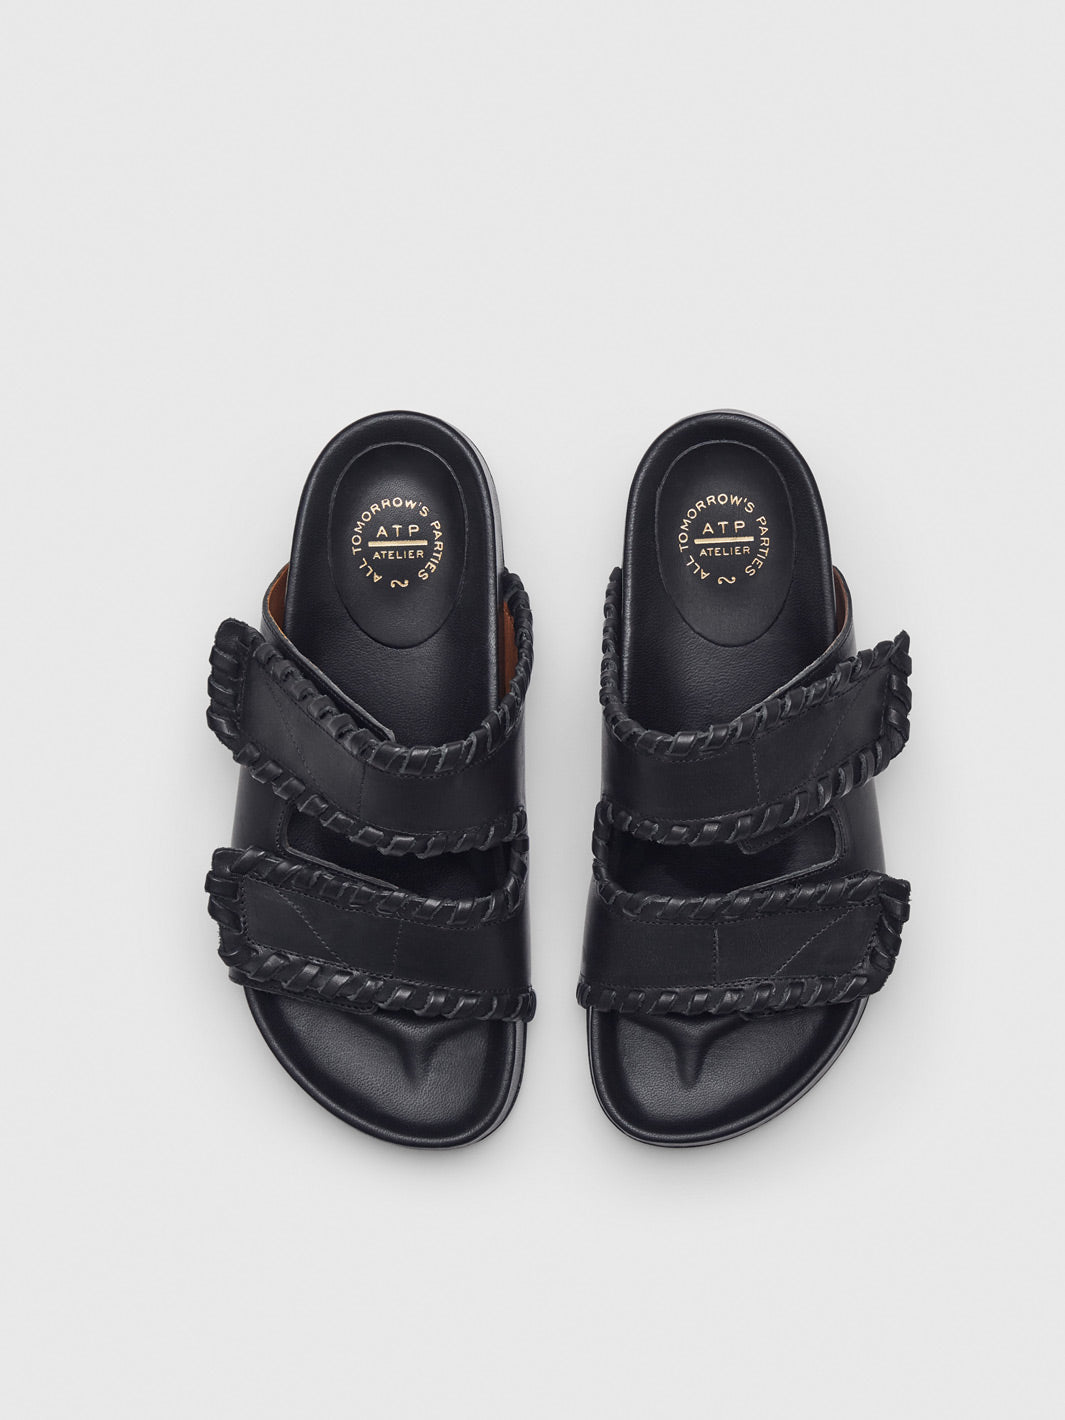 Furlo Stitch Black Leather Comfy sandals